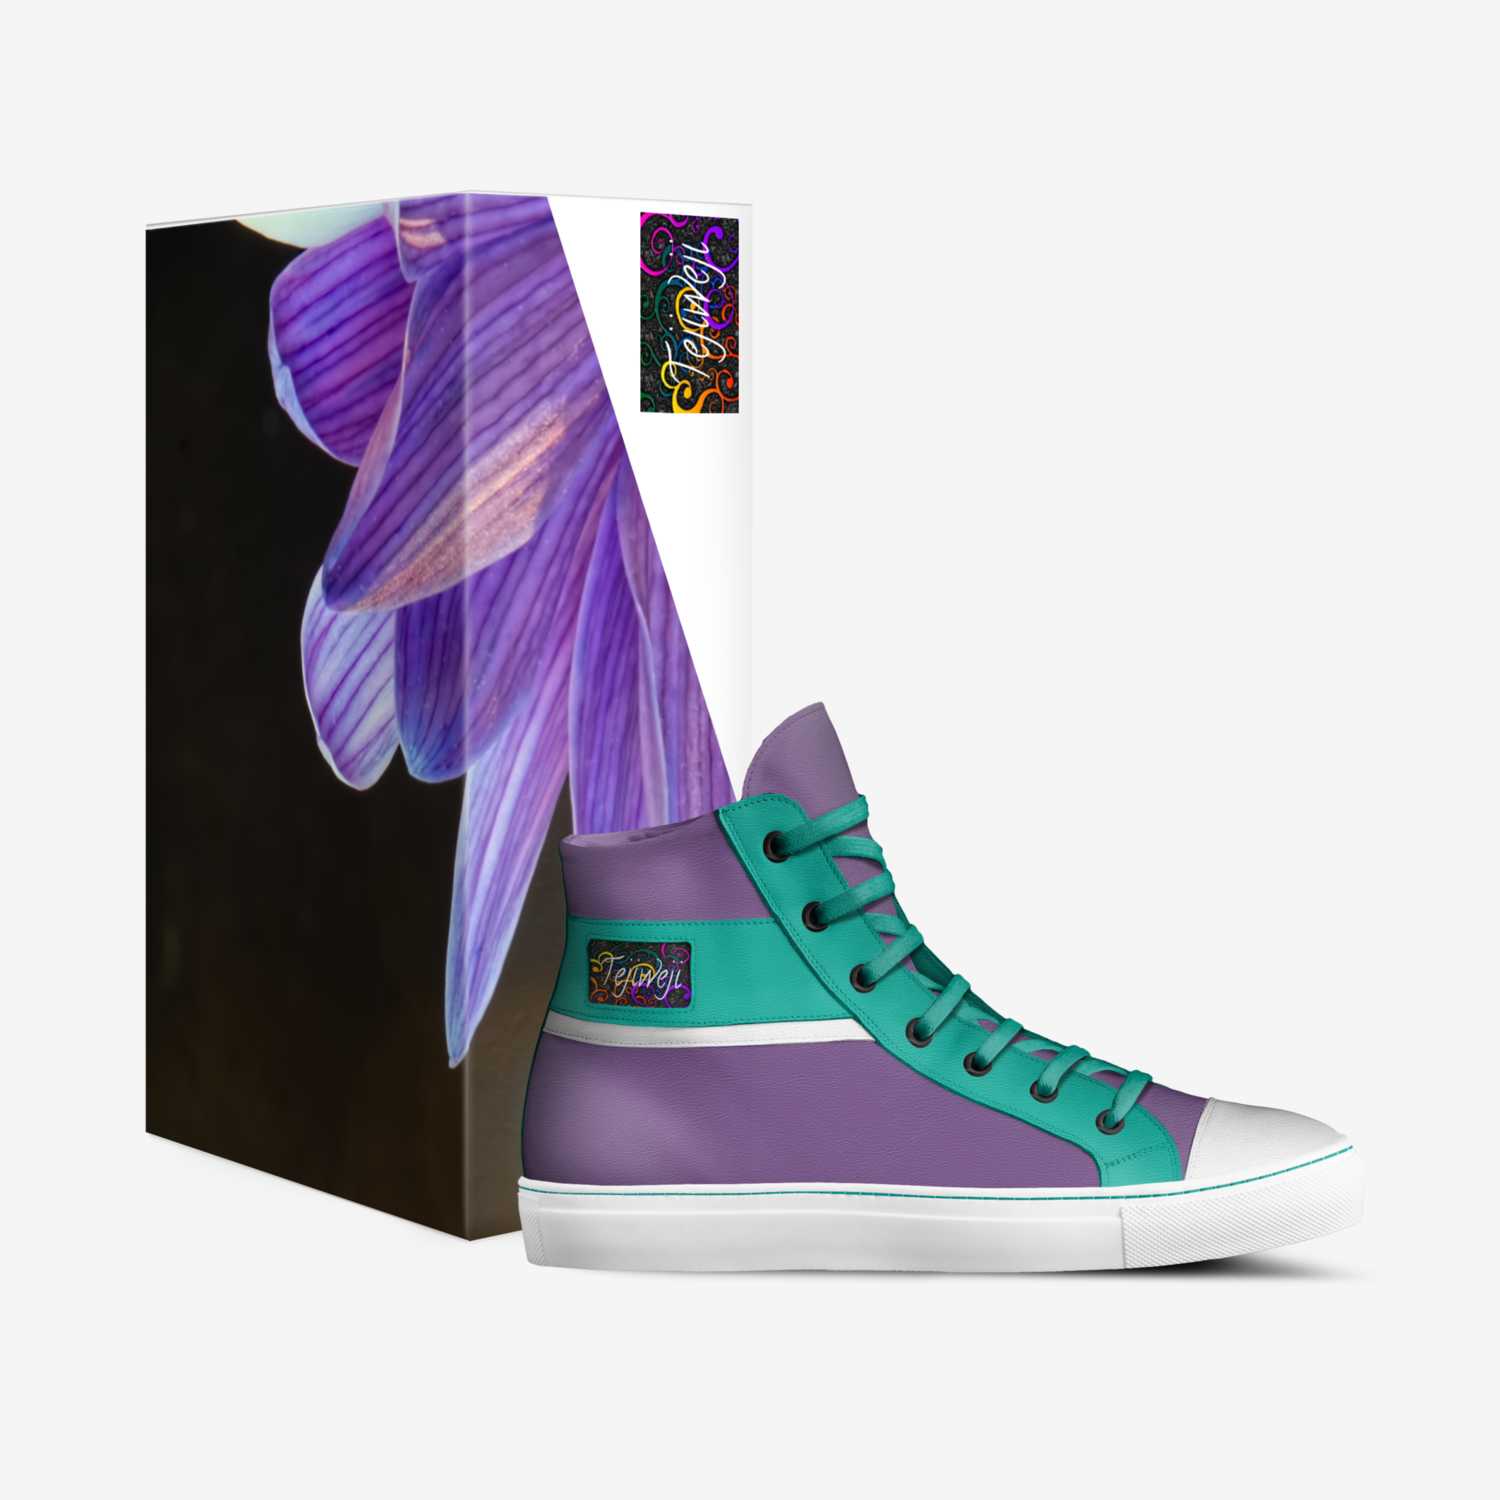 Tejiweji custom made in Italy shoes by Tejoi Dixon | Box view